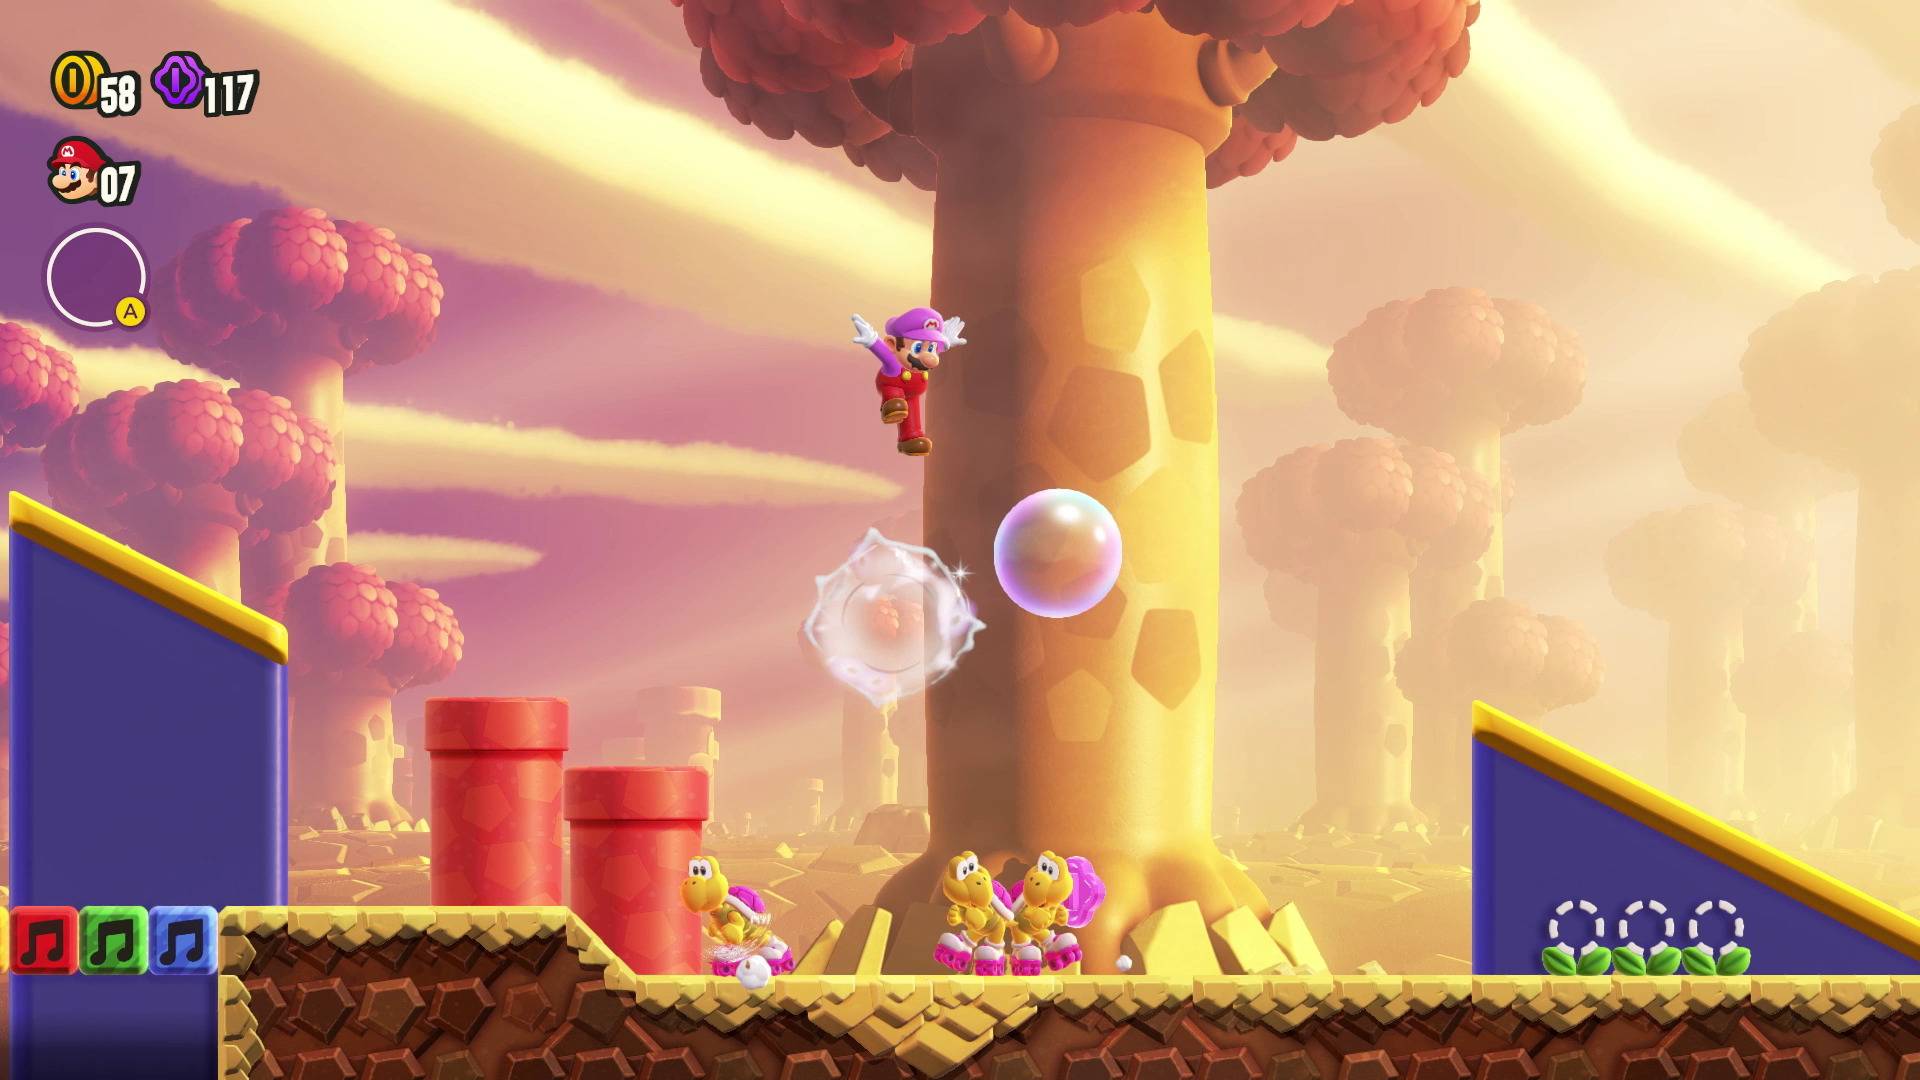 Super Mario Bros. Wonder review: Not Mush-room for improvement